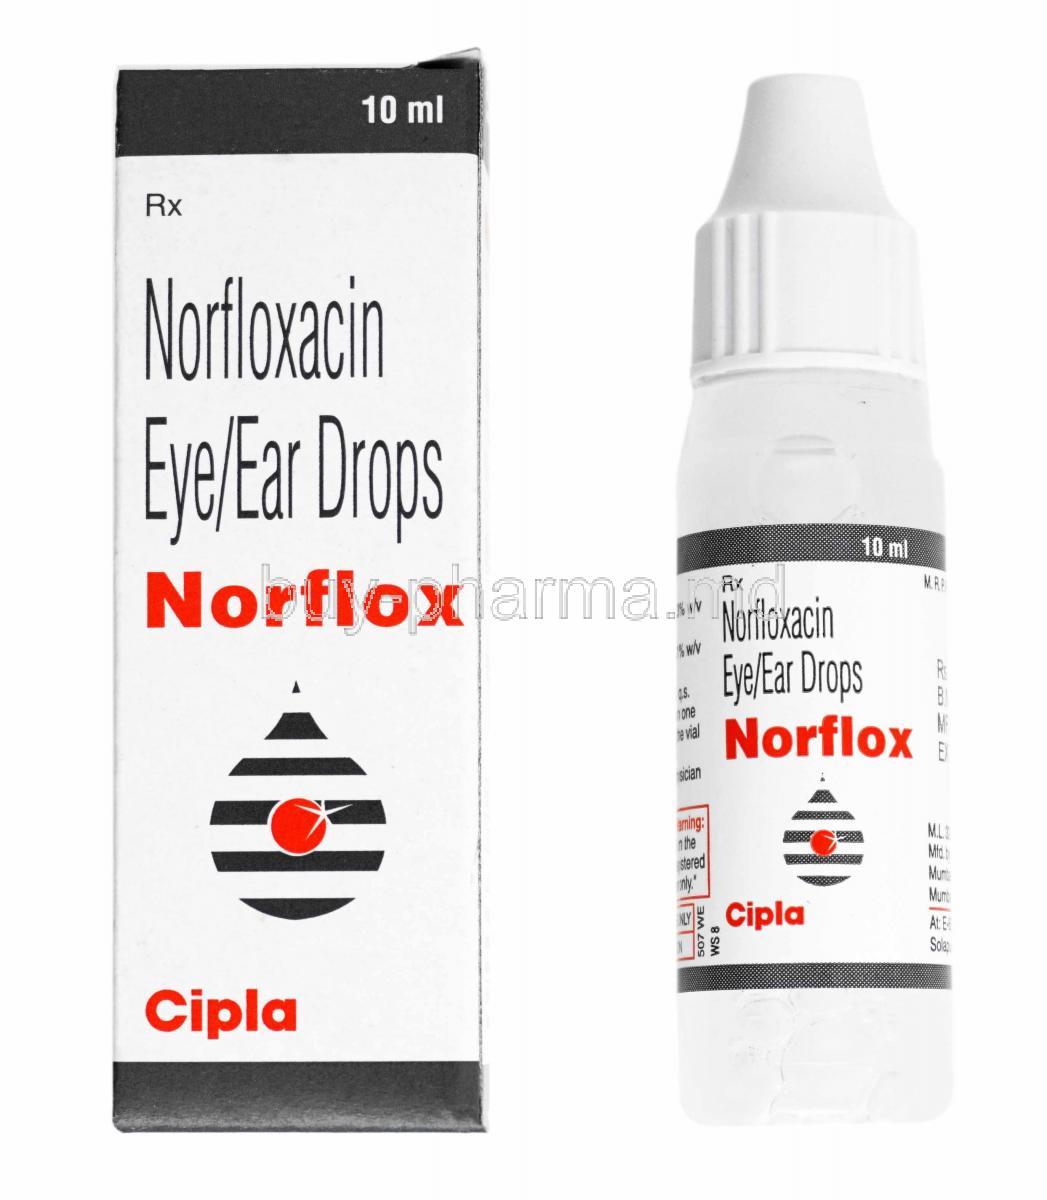 Norflox Eye Ear Drops, Norfloxacin box and bottle